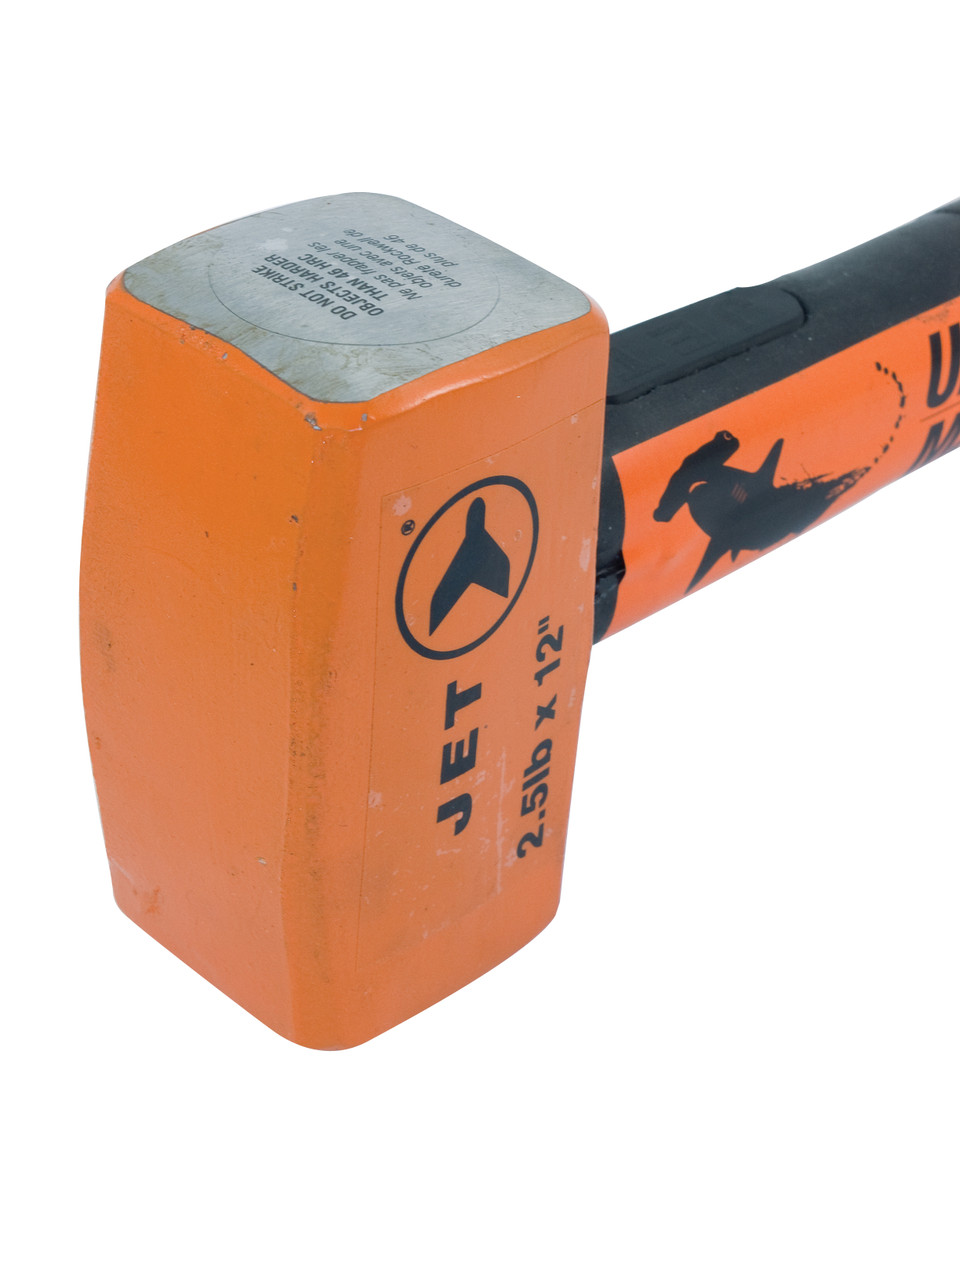 2.5 lb. x 12" Indestructible Handle Sledge Hammer 740580